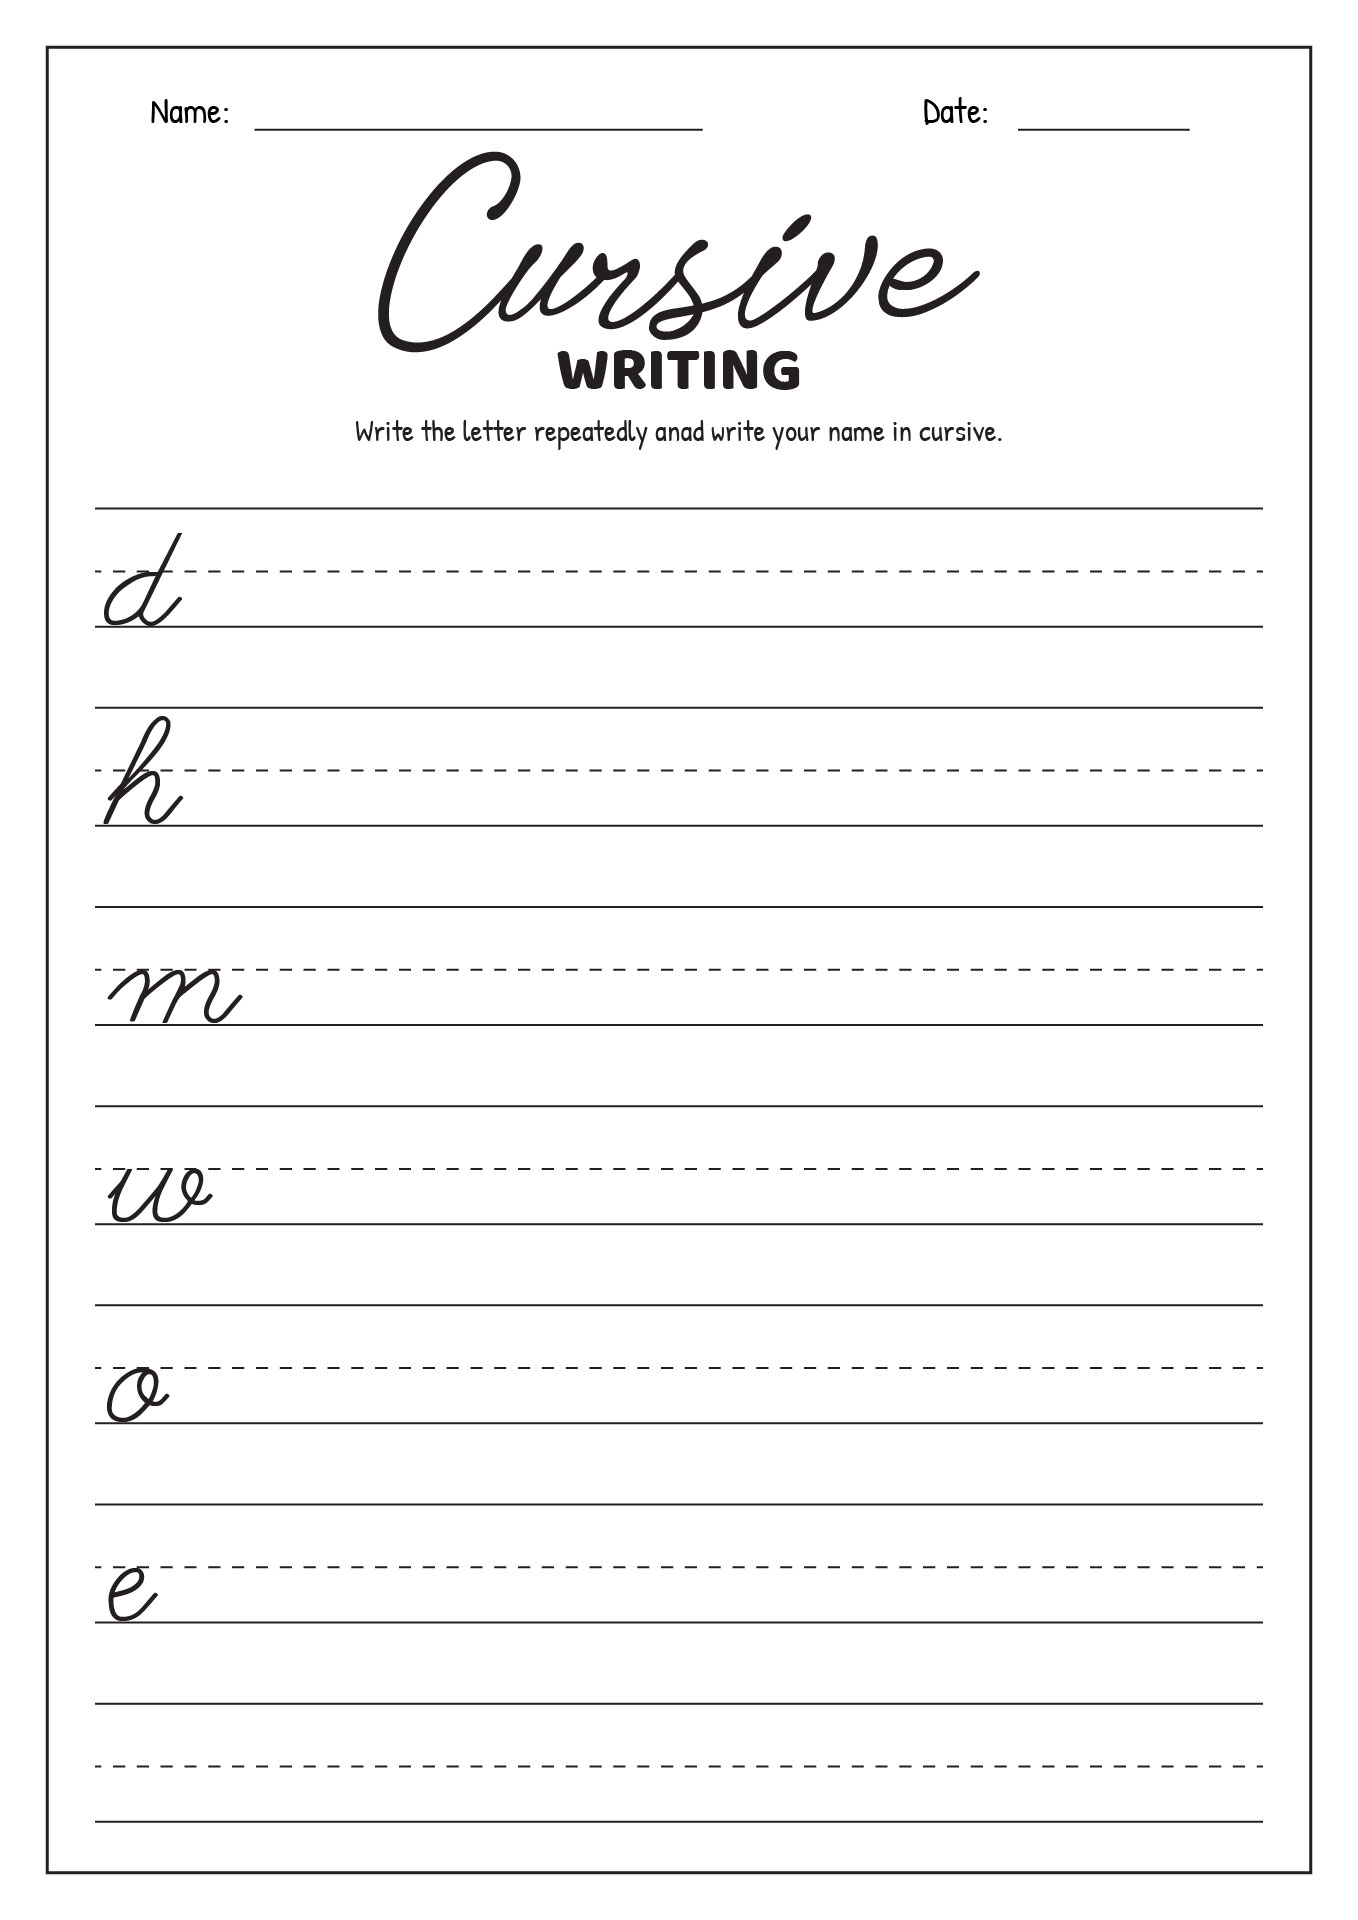 16 Cursive Writing Worksheets For 3rd Grade - Free PDF at worksheeto.com